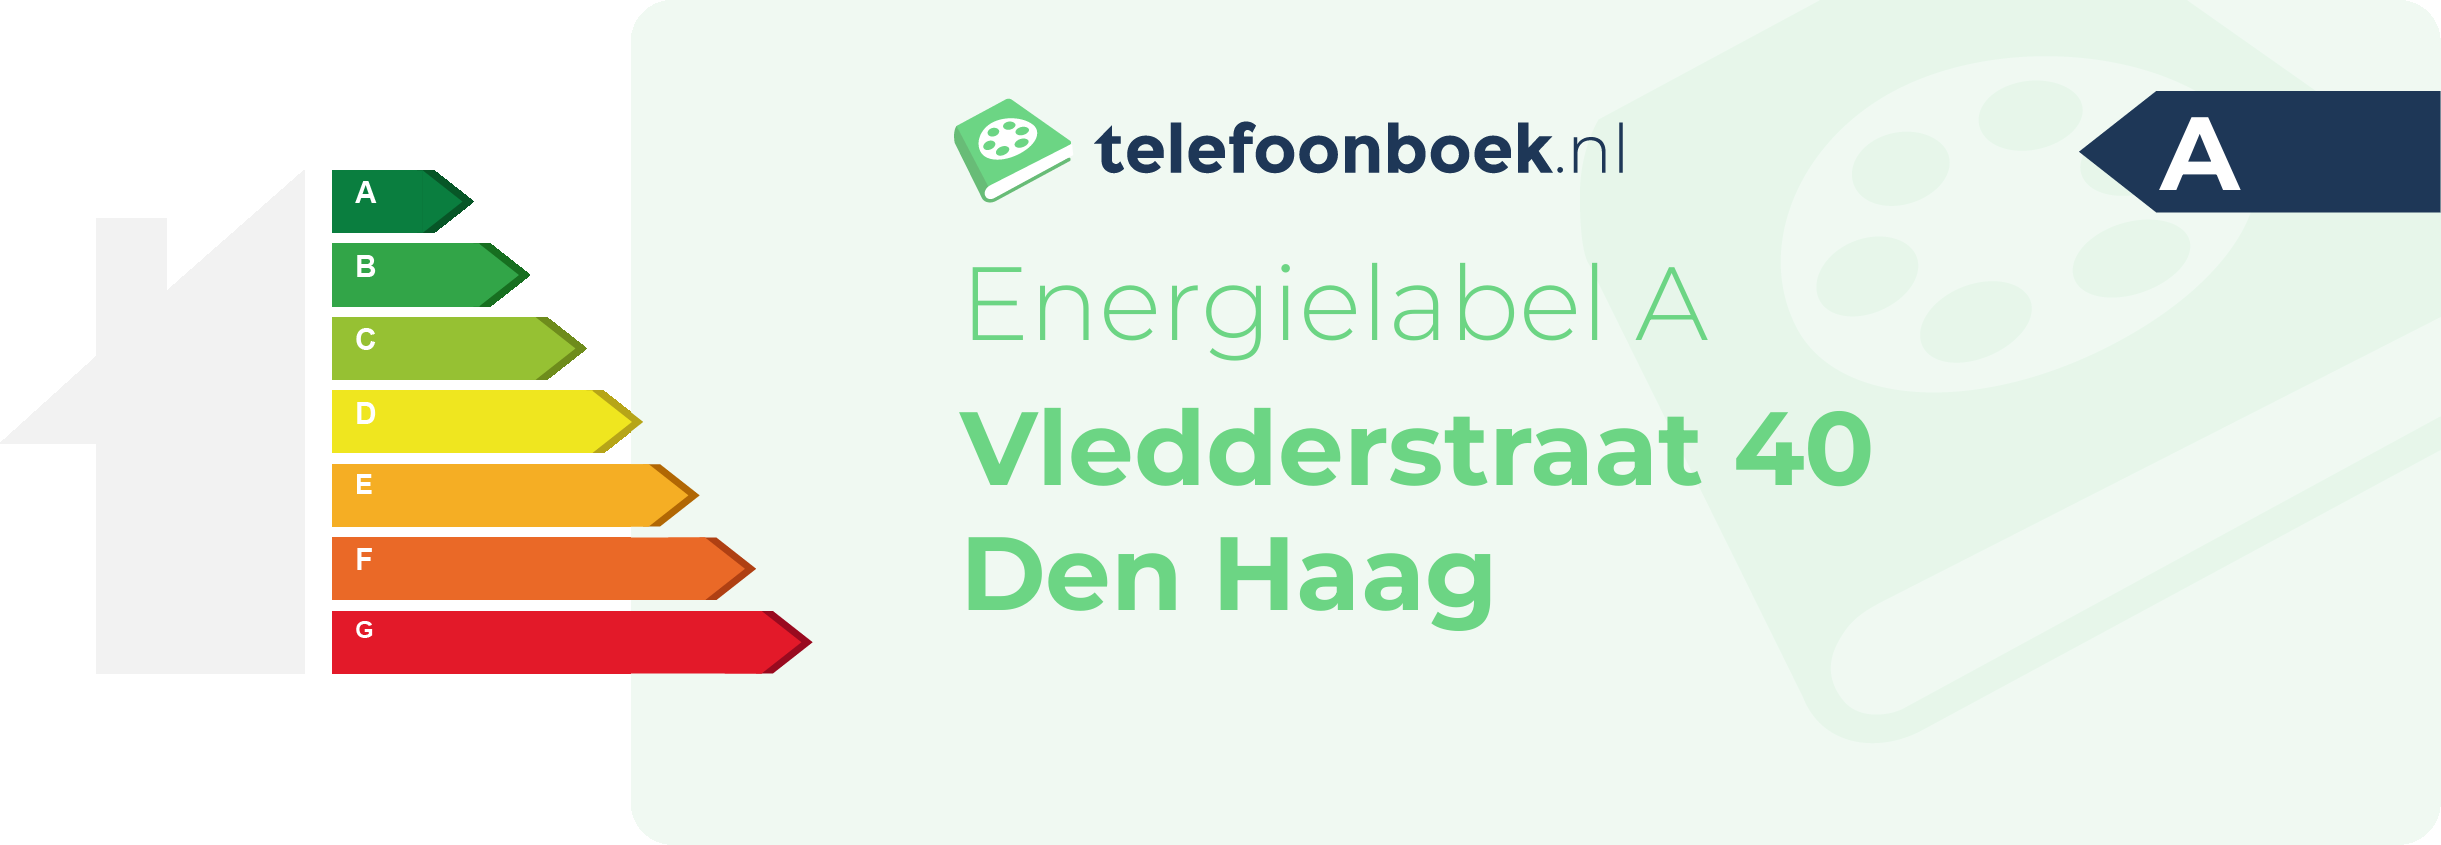 Energielabel Vledderstraat 40 Den Haag